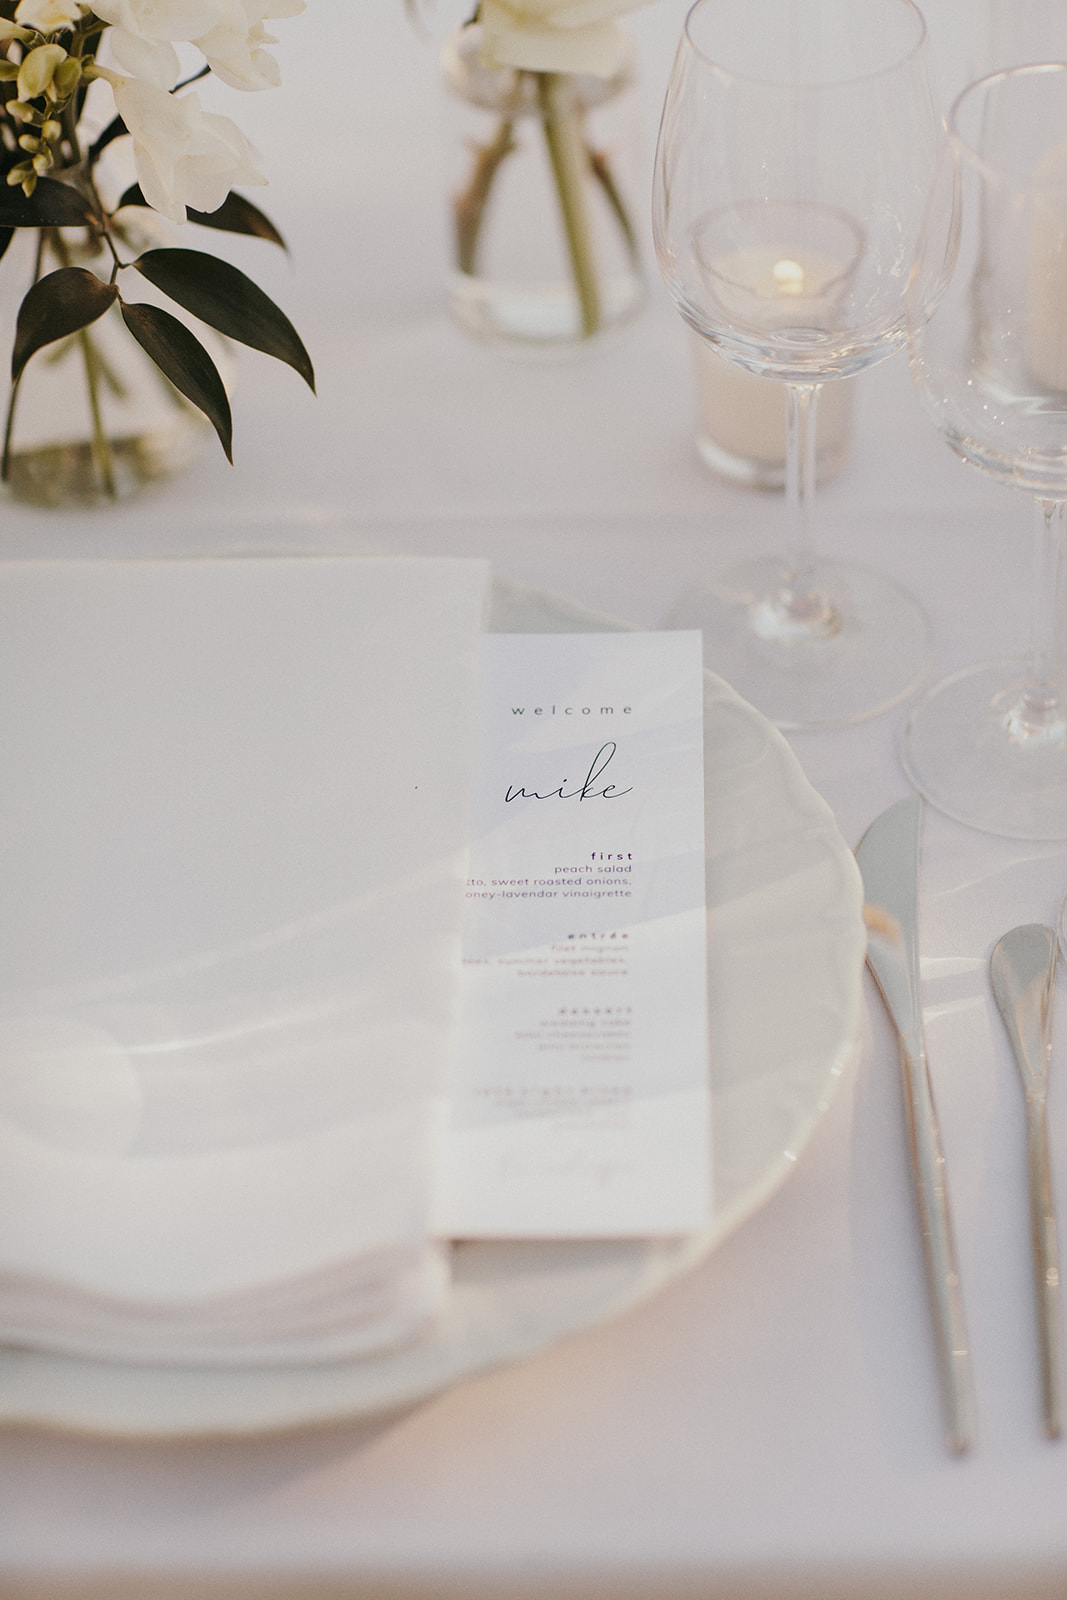 Elegant all white menus for reception